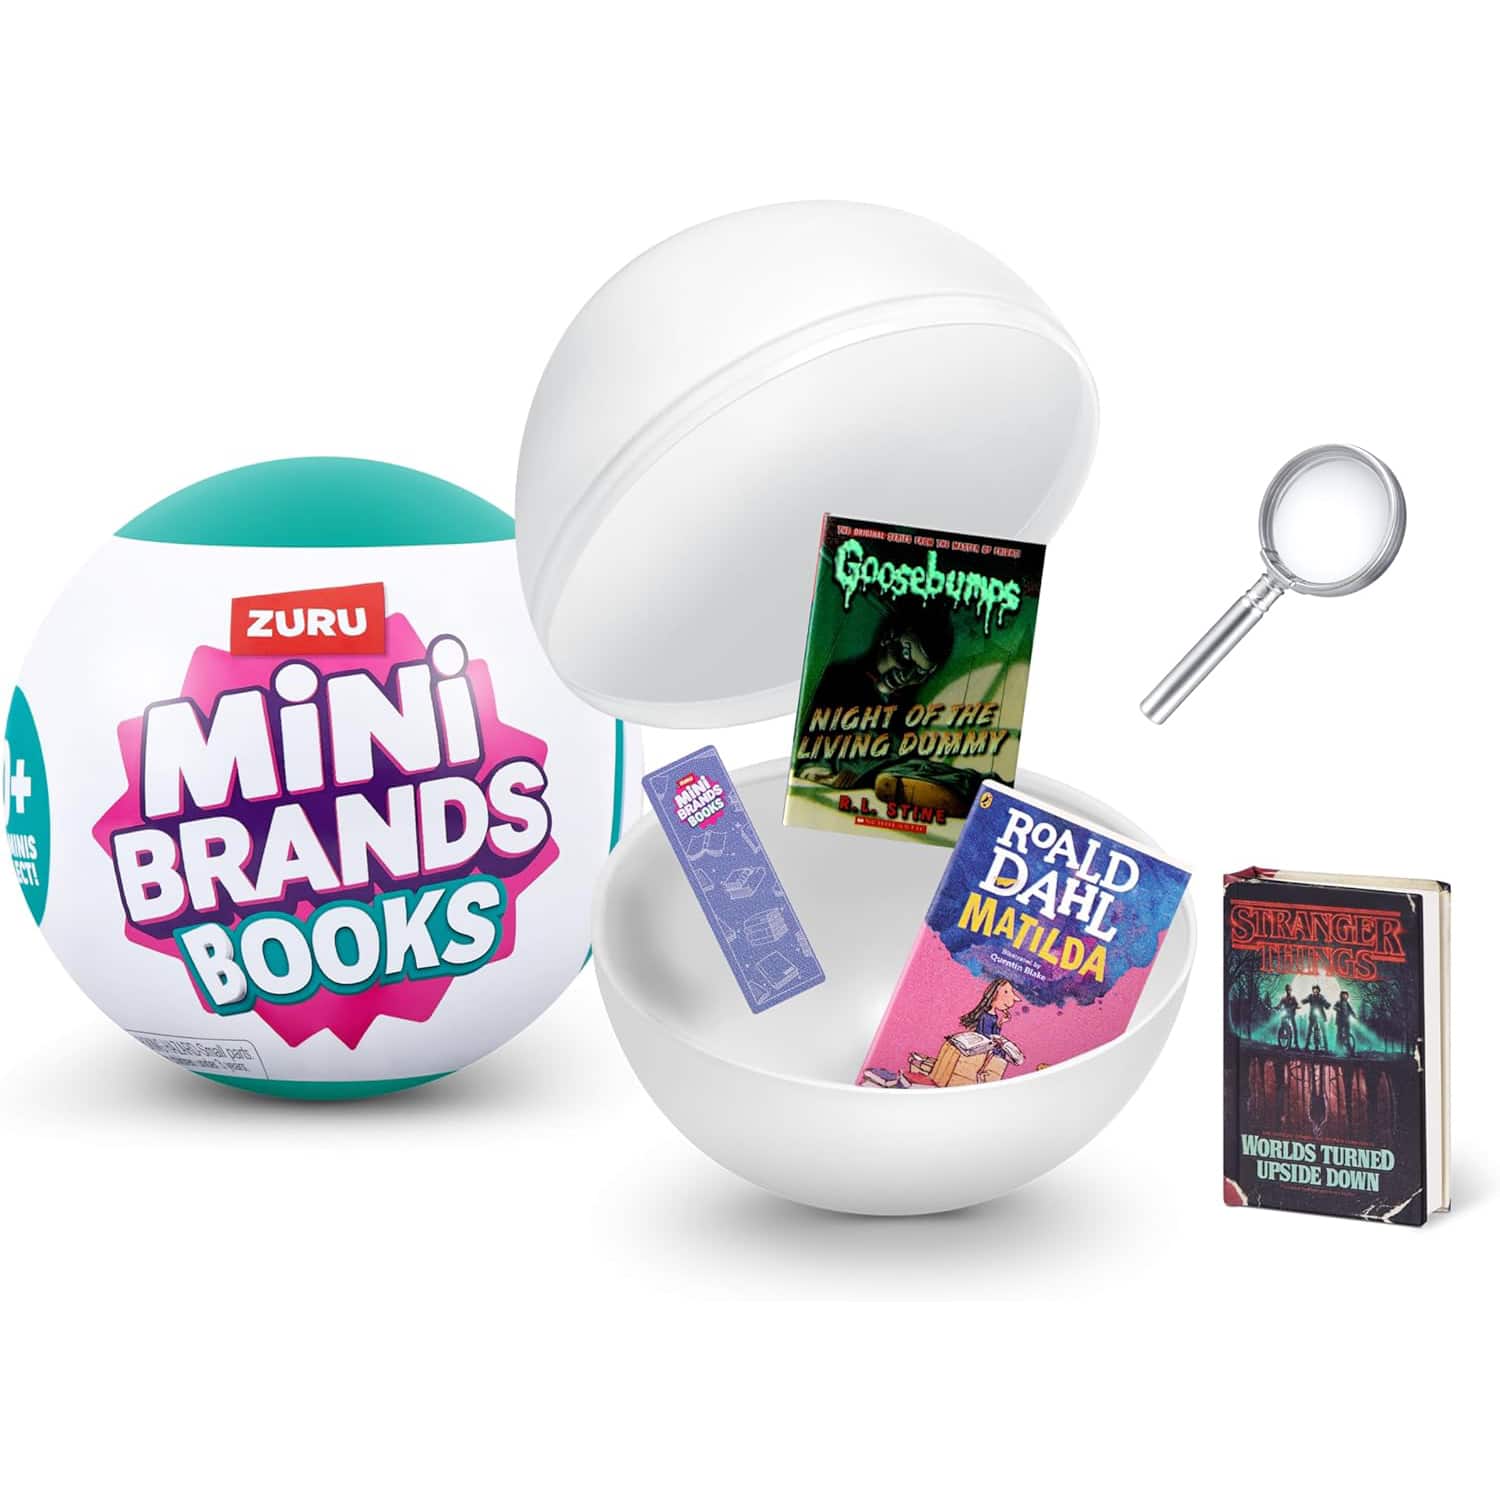 Mini Brands Books Blind Pack